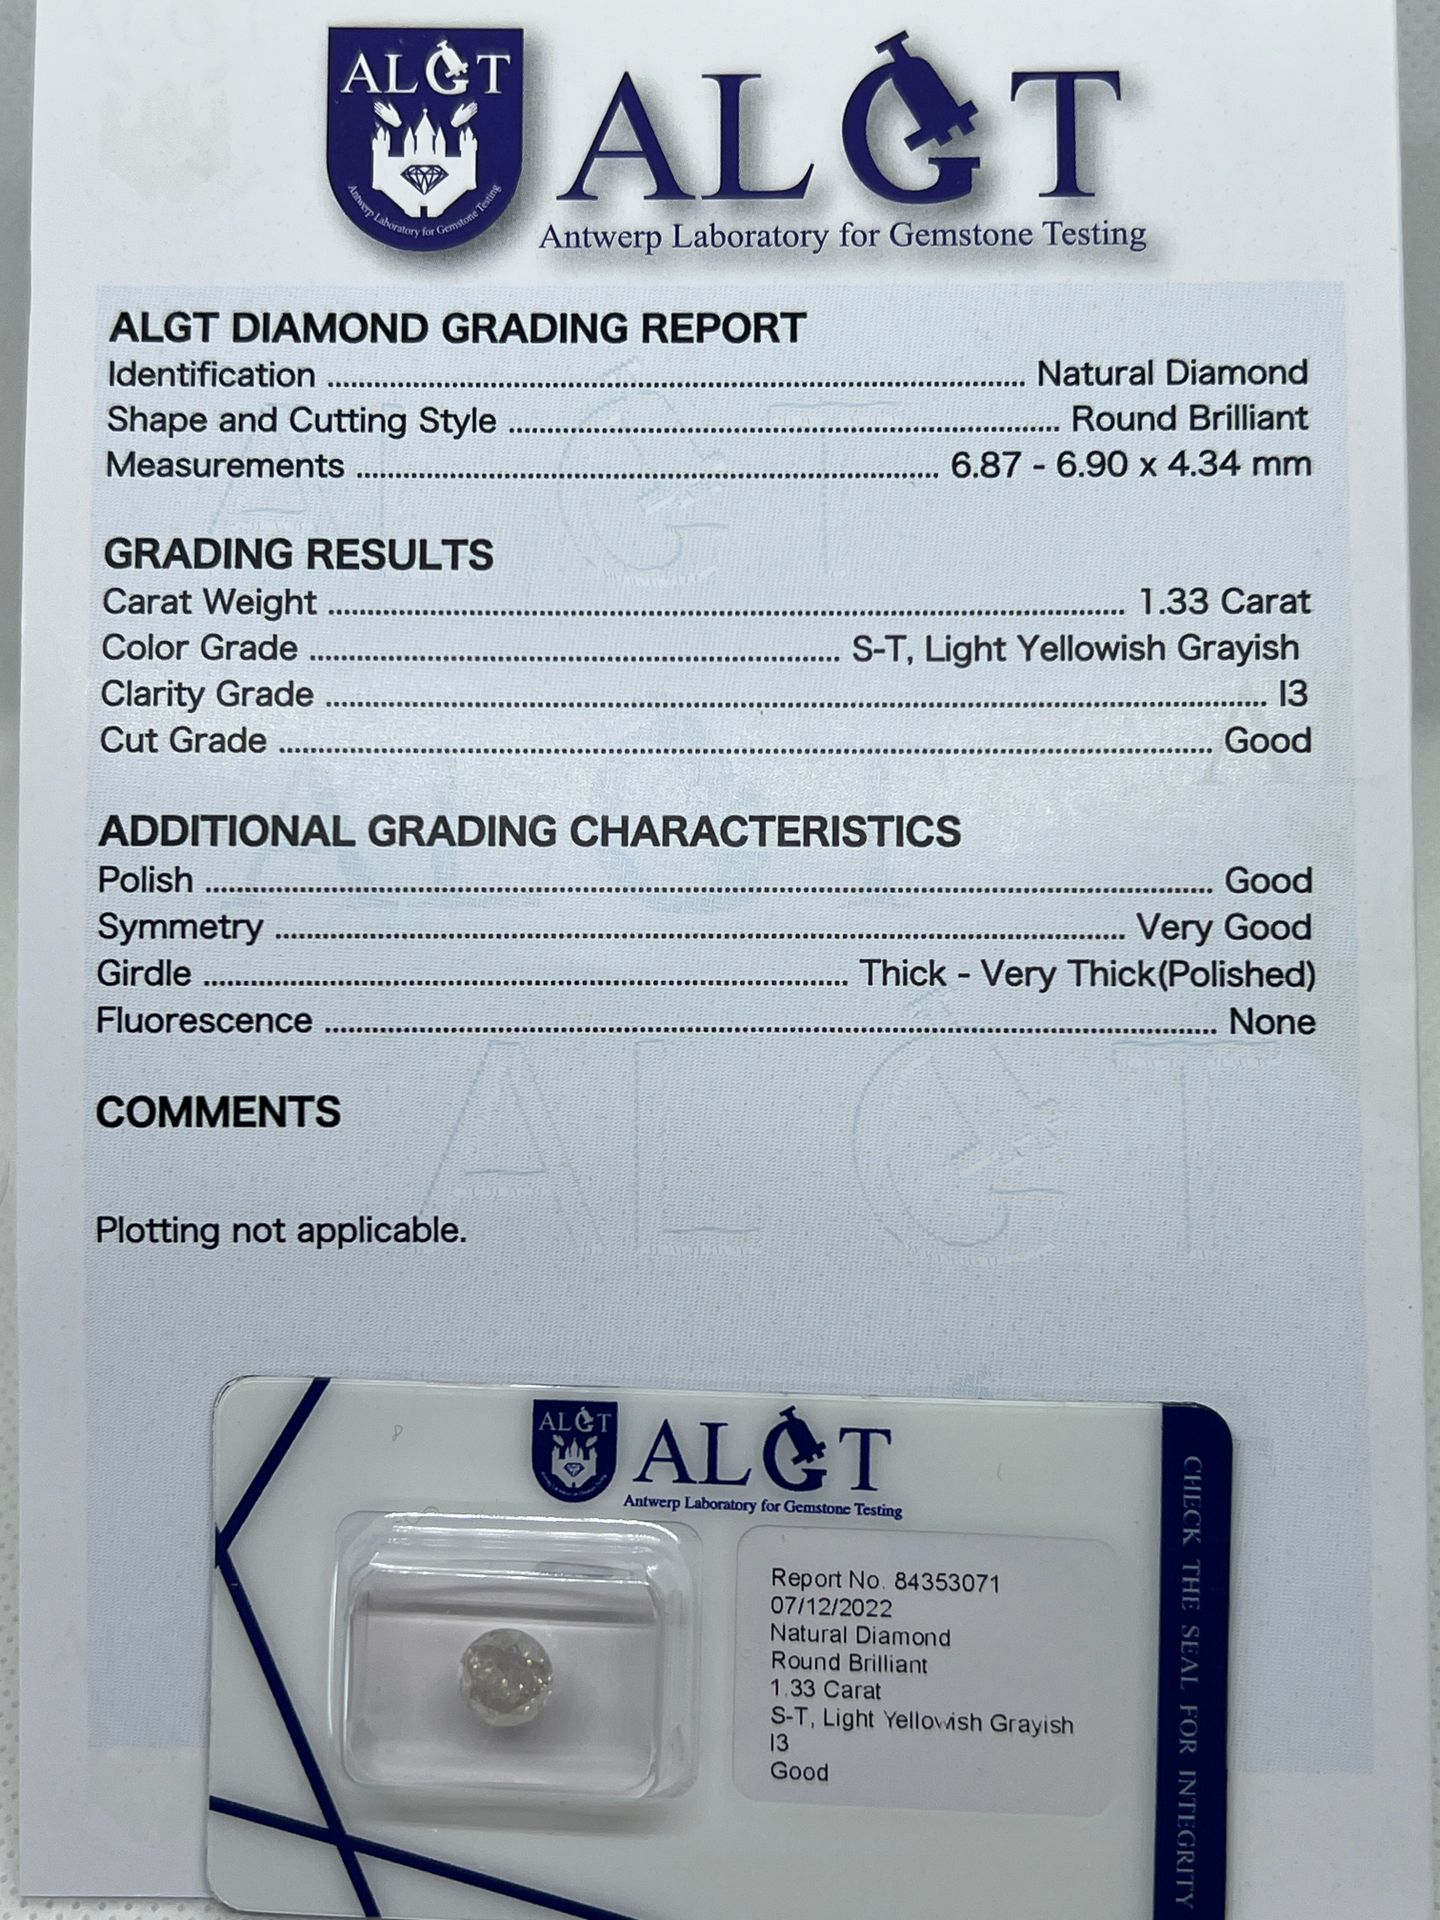 DIAMANT 钻石 1.33 克拉，保证书，保证书是拍品描述的一部分。法国境内运费为 30 欧元，欧洲为 40 欧元，海外为 50 欧元。